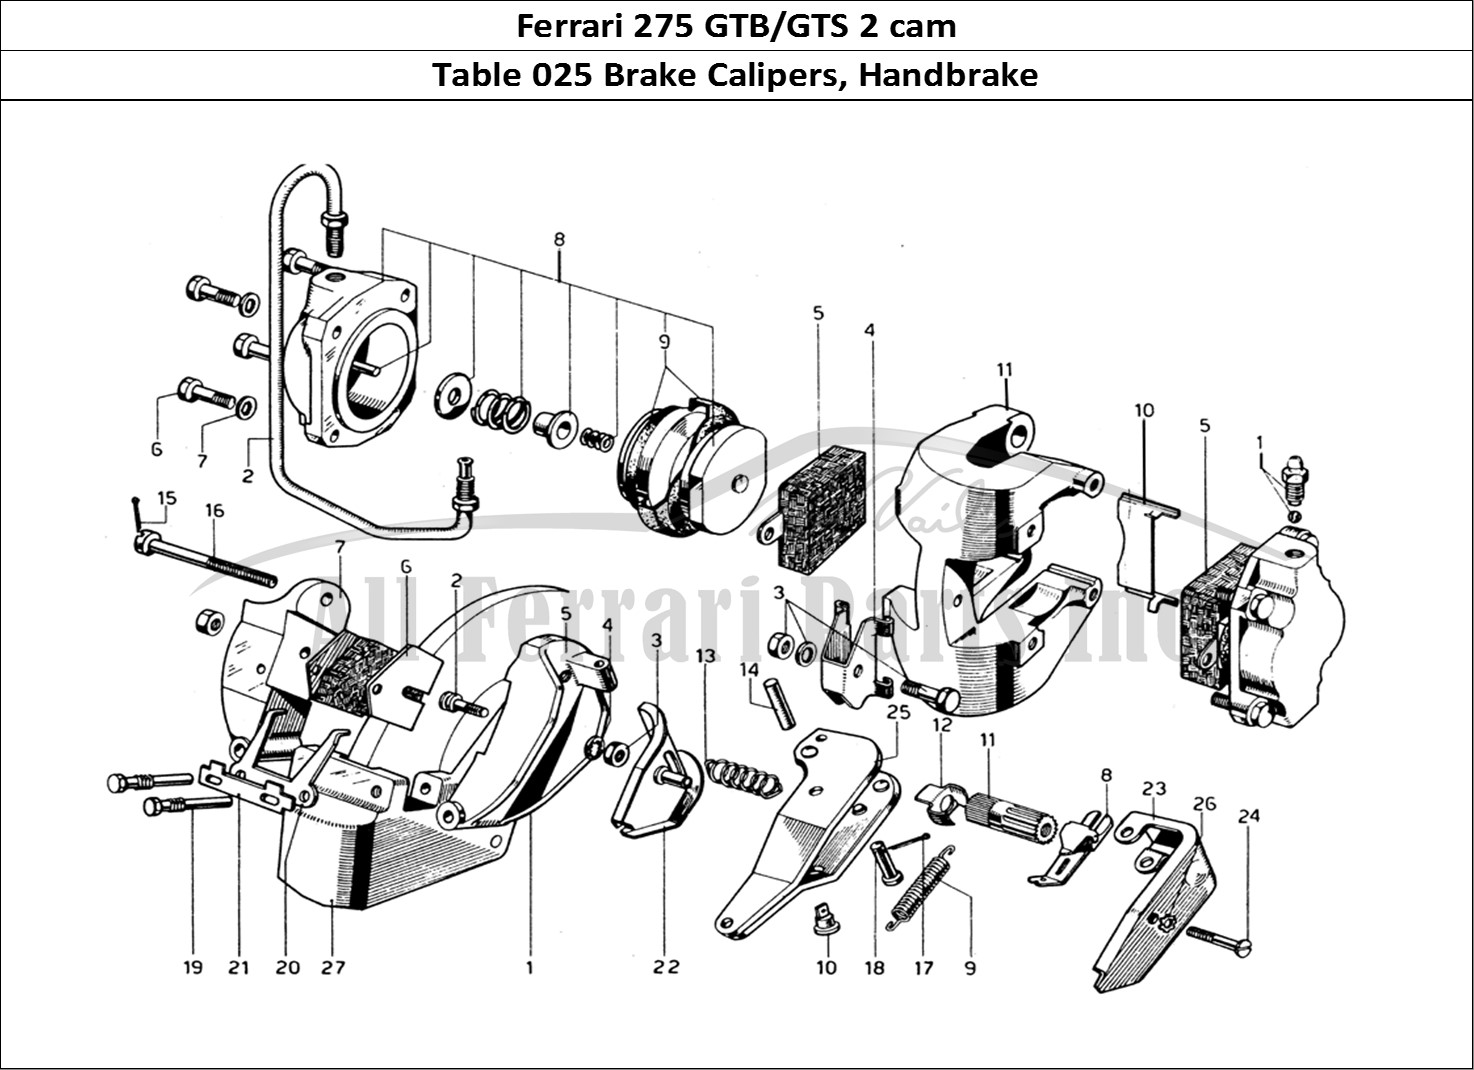 Ferrari Parts Ferrari 275 GTB/GTS 2 cam Page 025 Front - Rear Brake Calipe